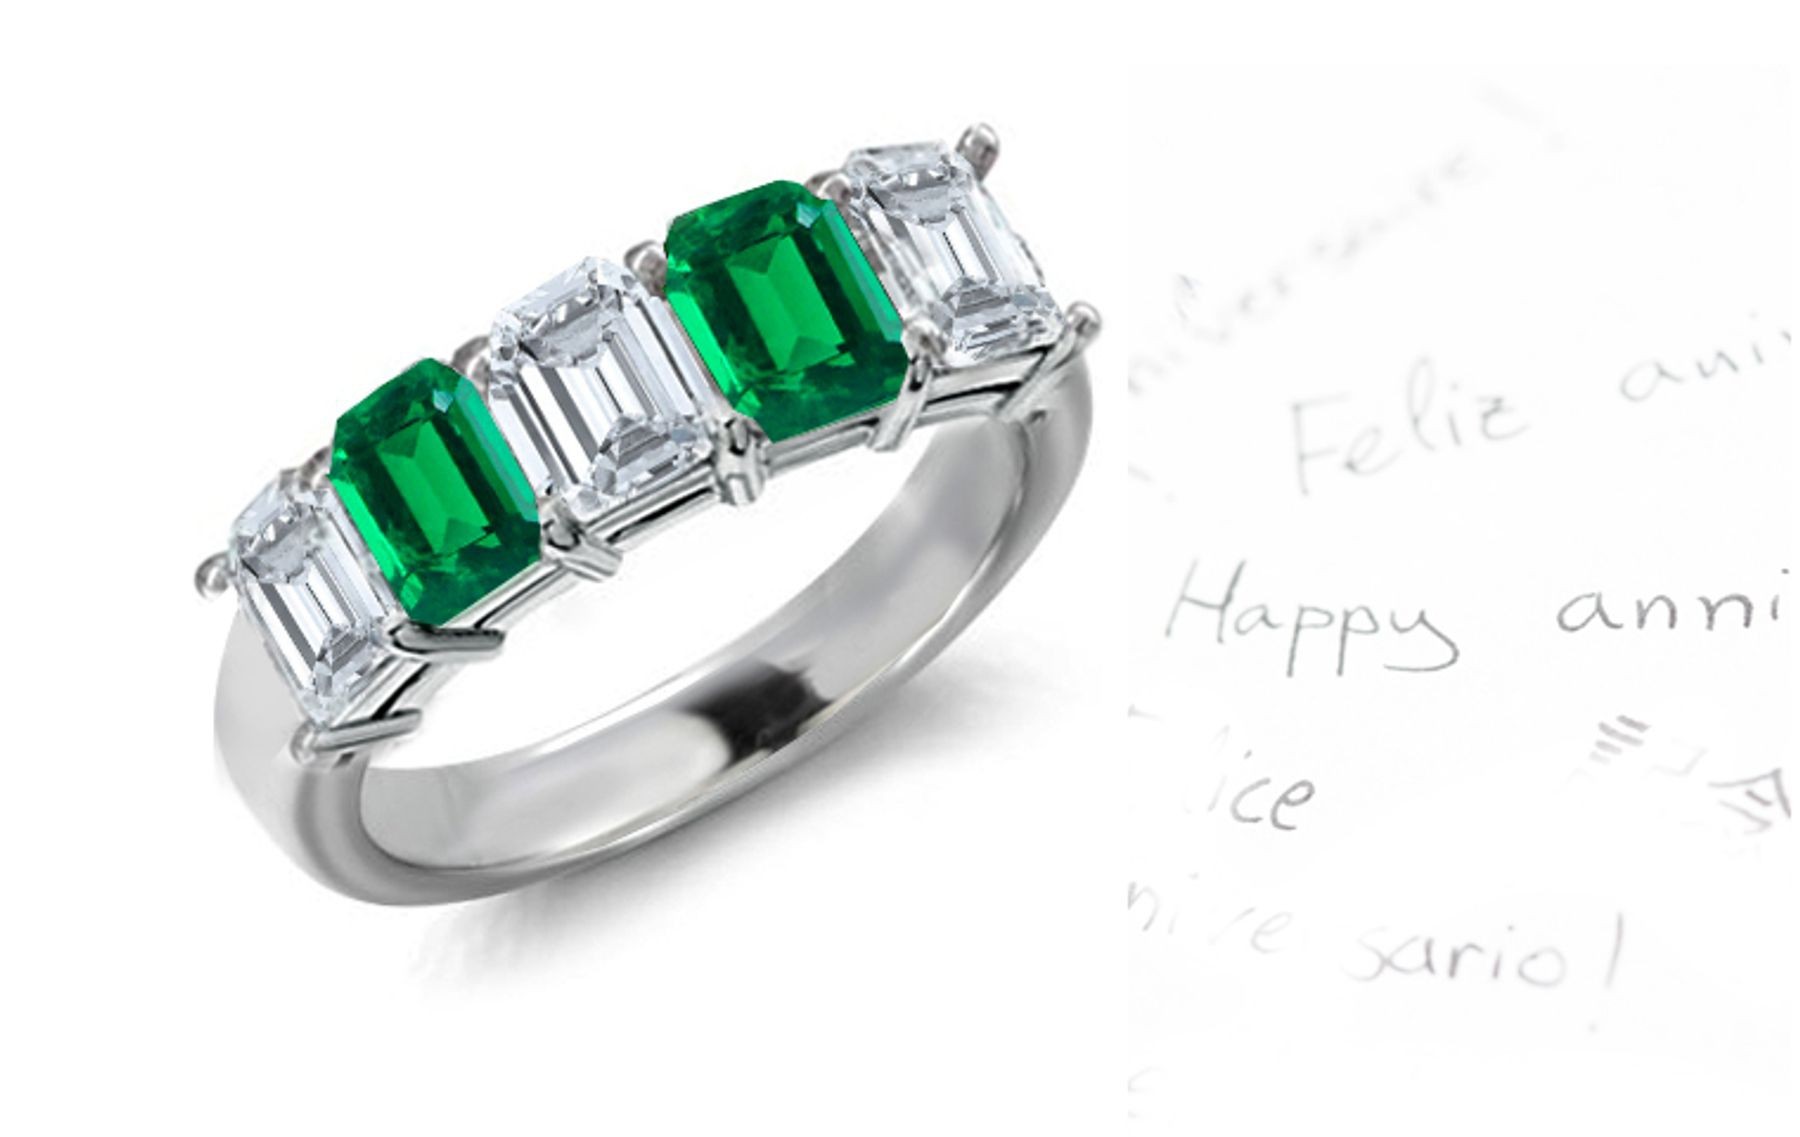 Exceptional: 7 Stone Emerald Cut Emerald & Emerald Cut Diamond Ring in Platinum